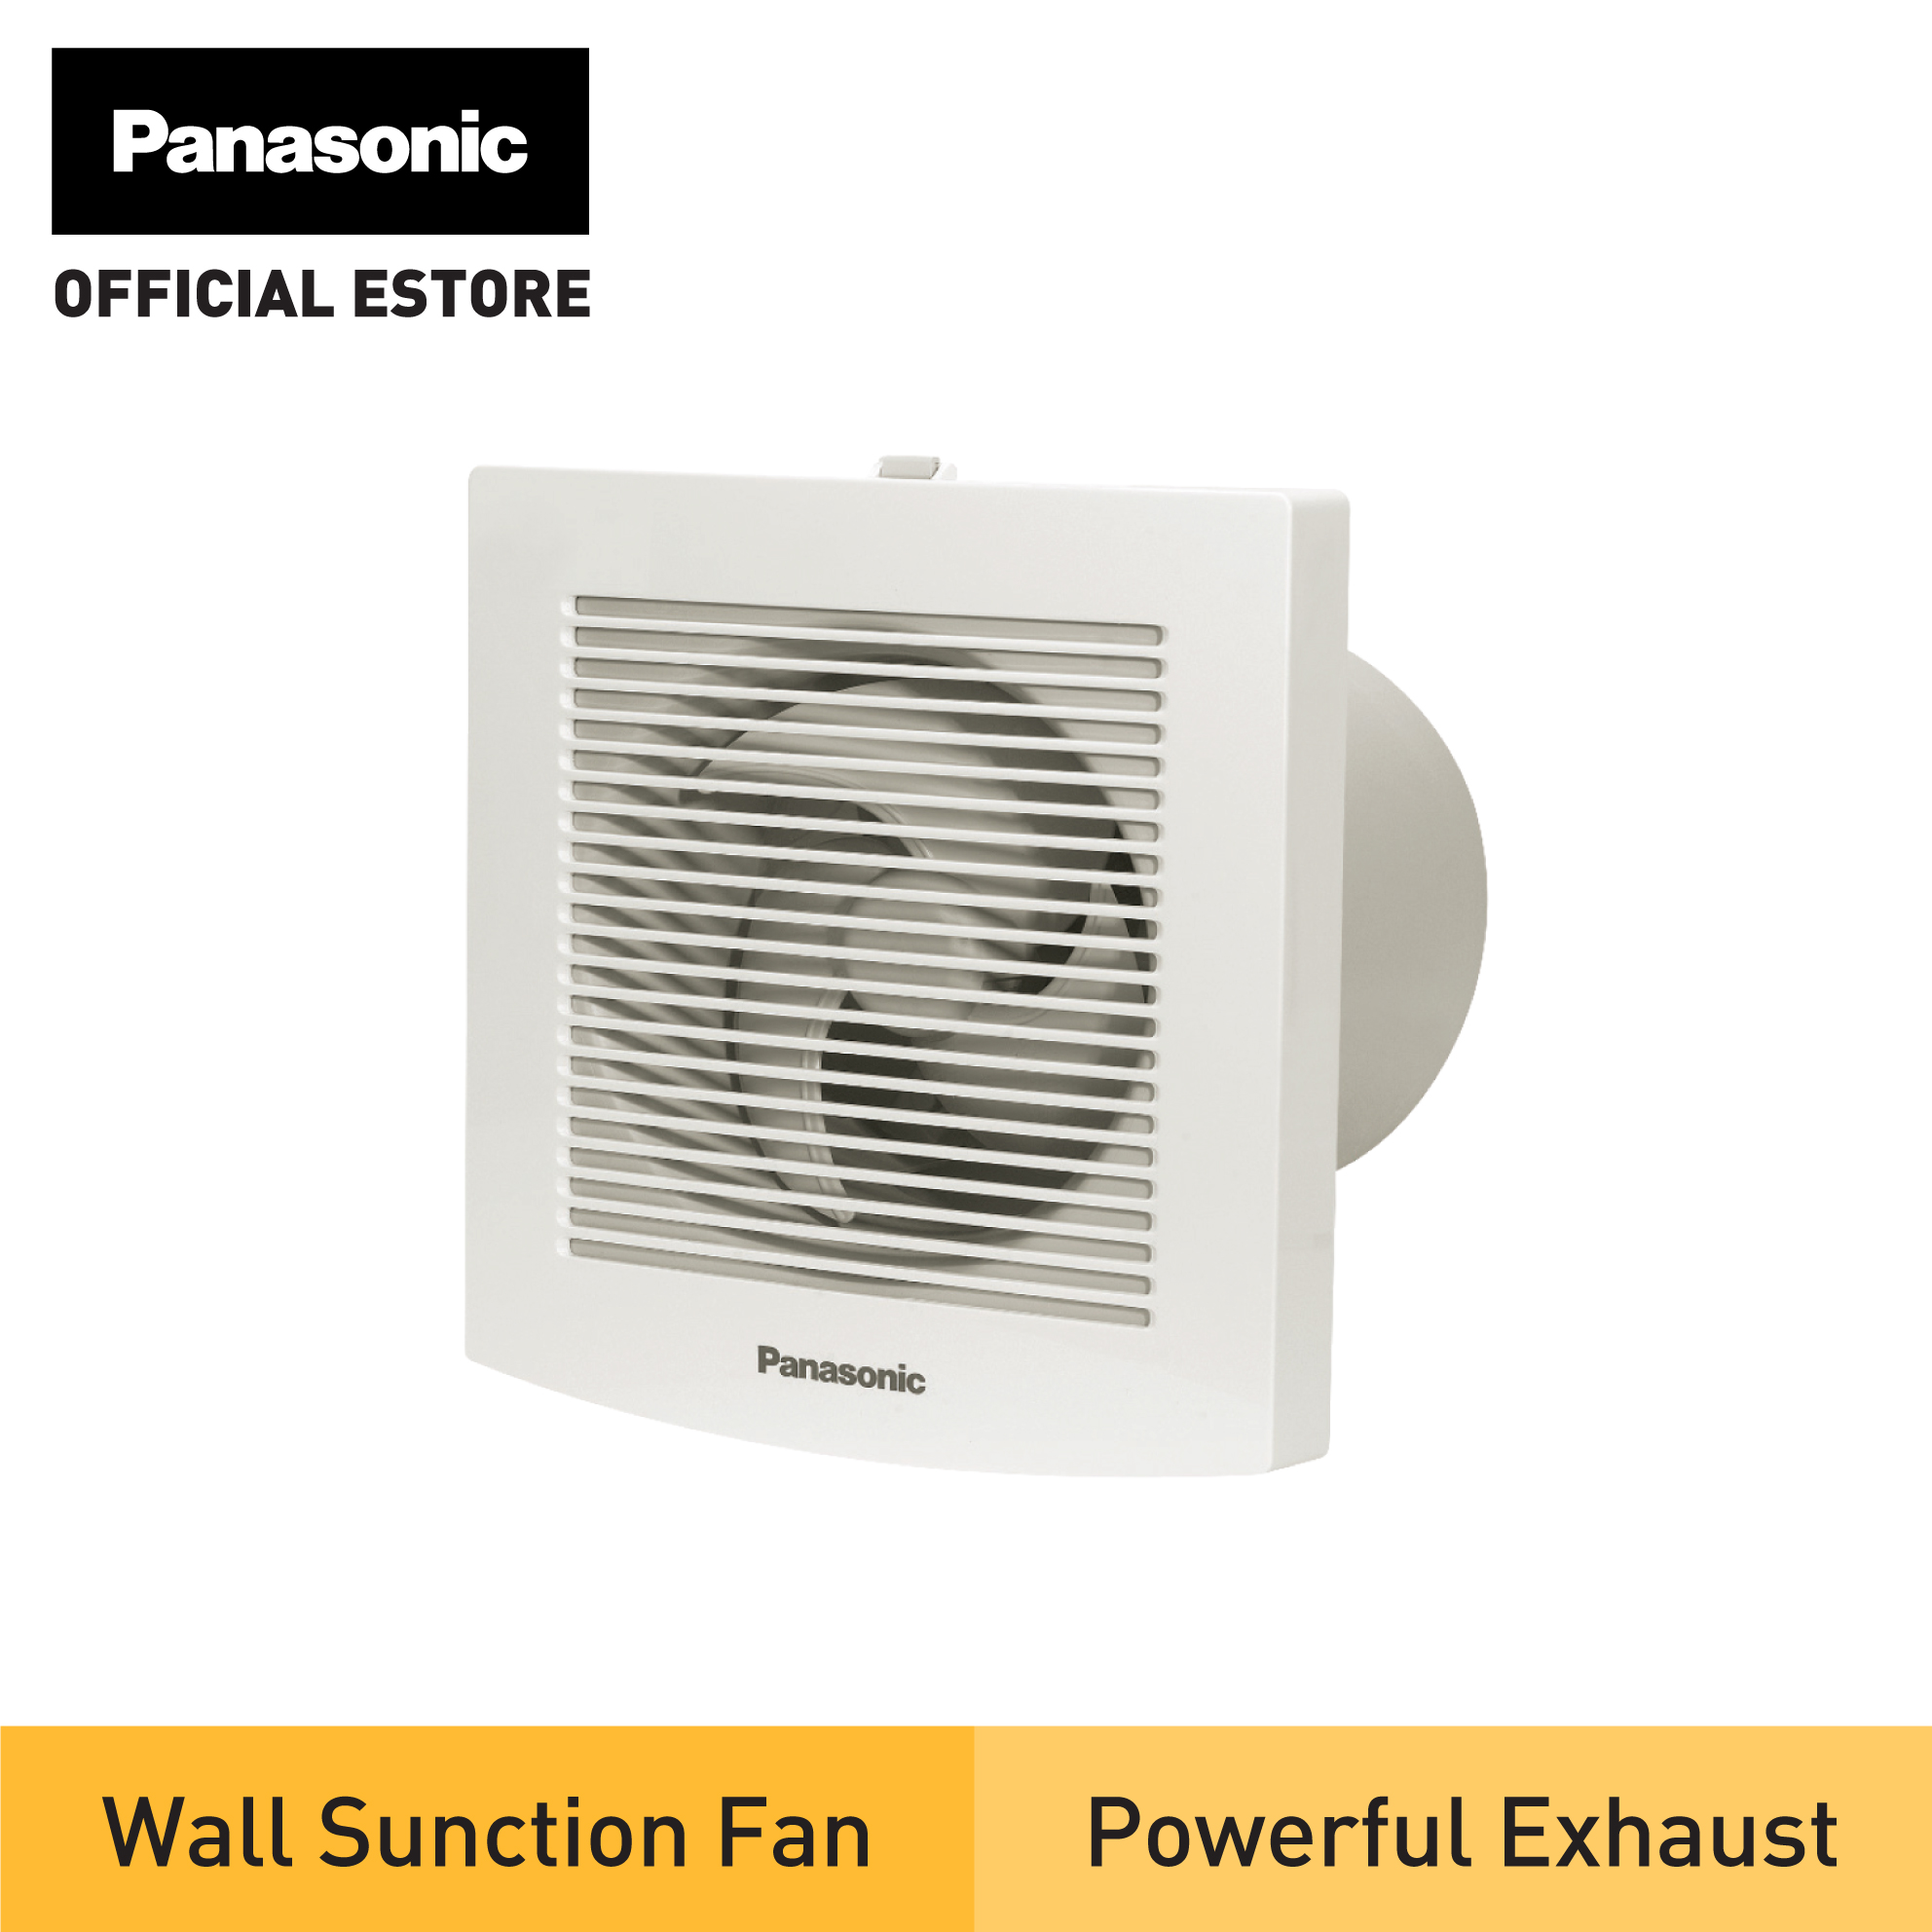 Panasonic Fv 15egs1 Wall Suction